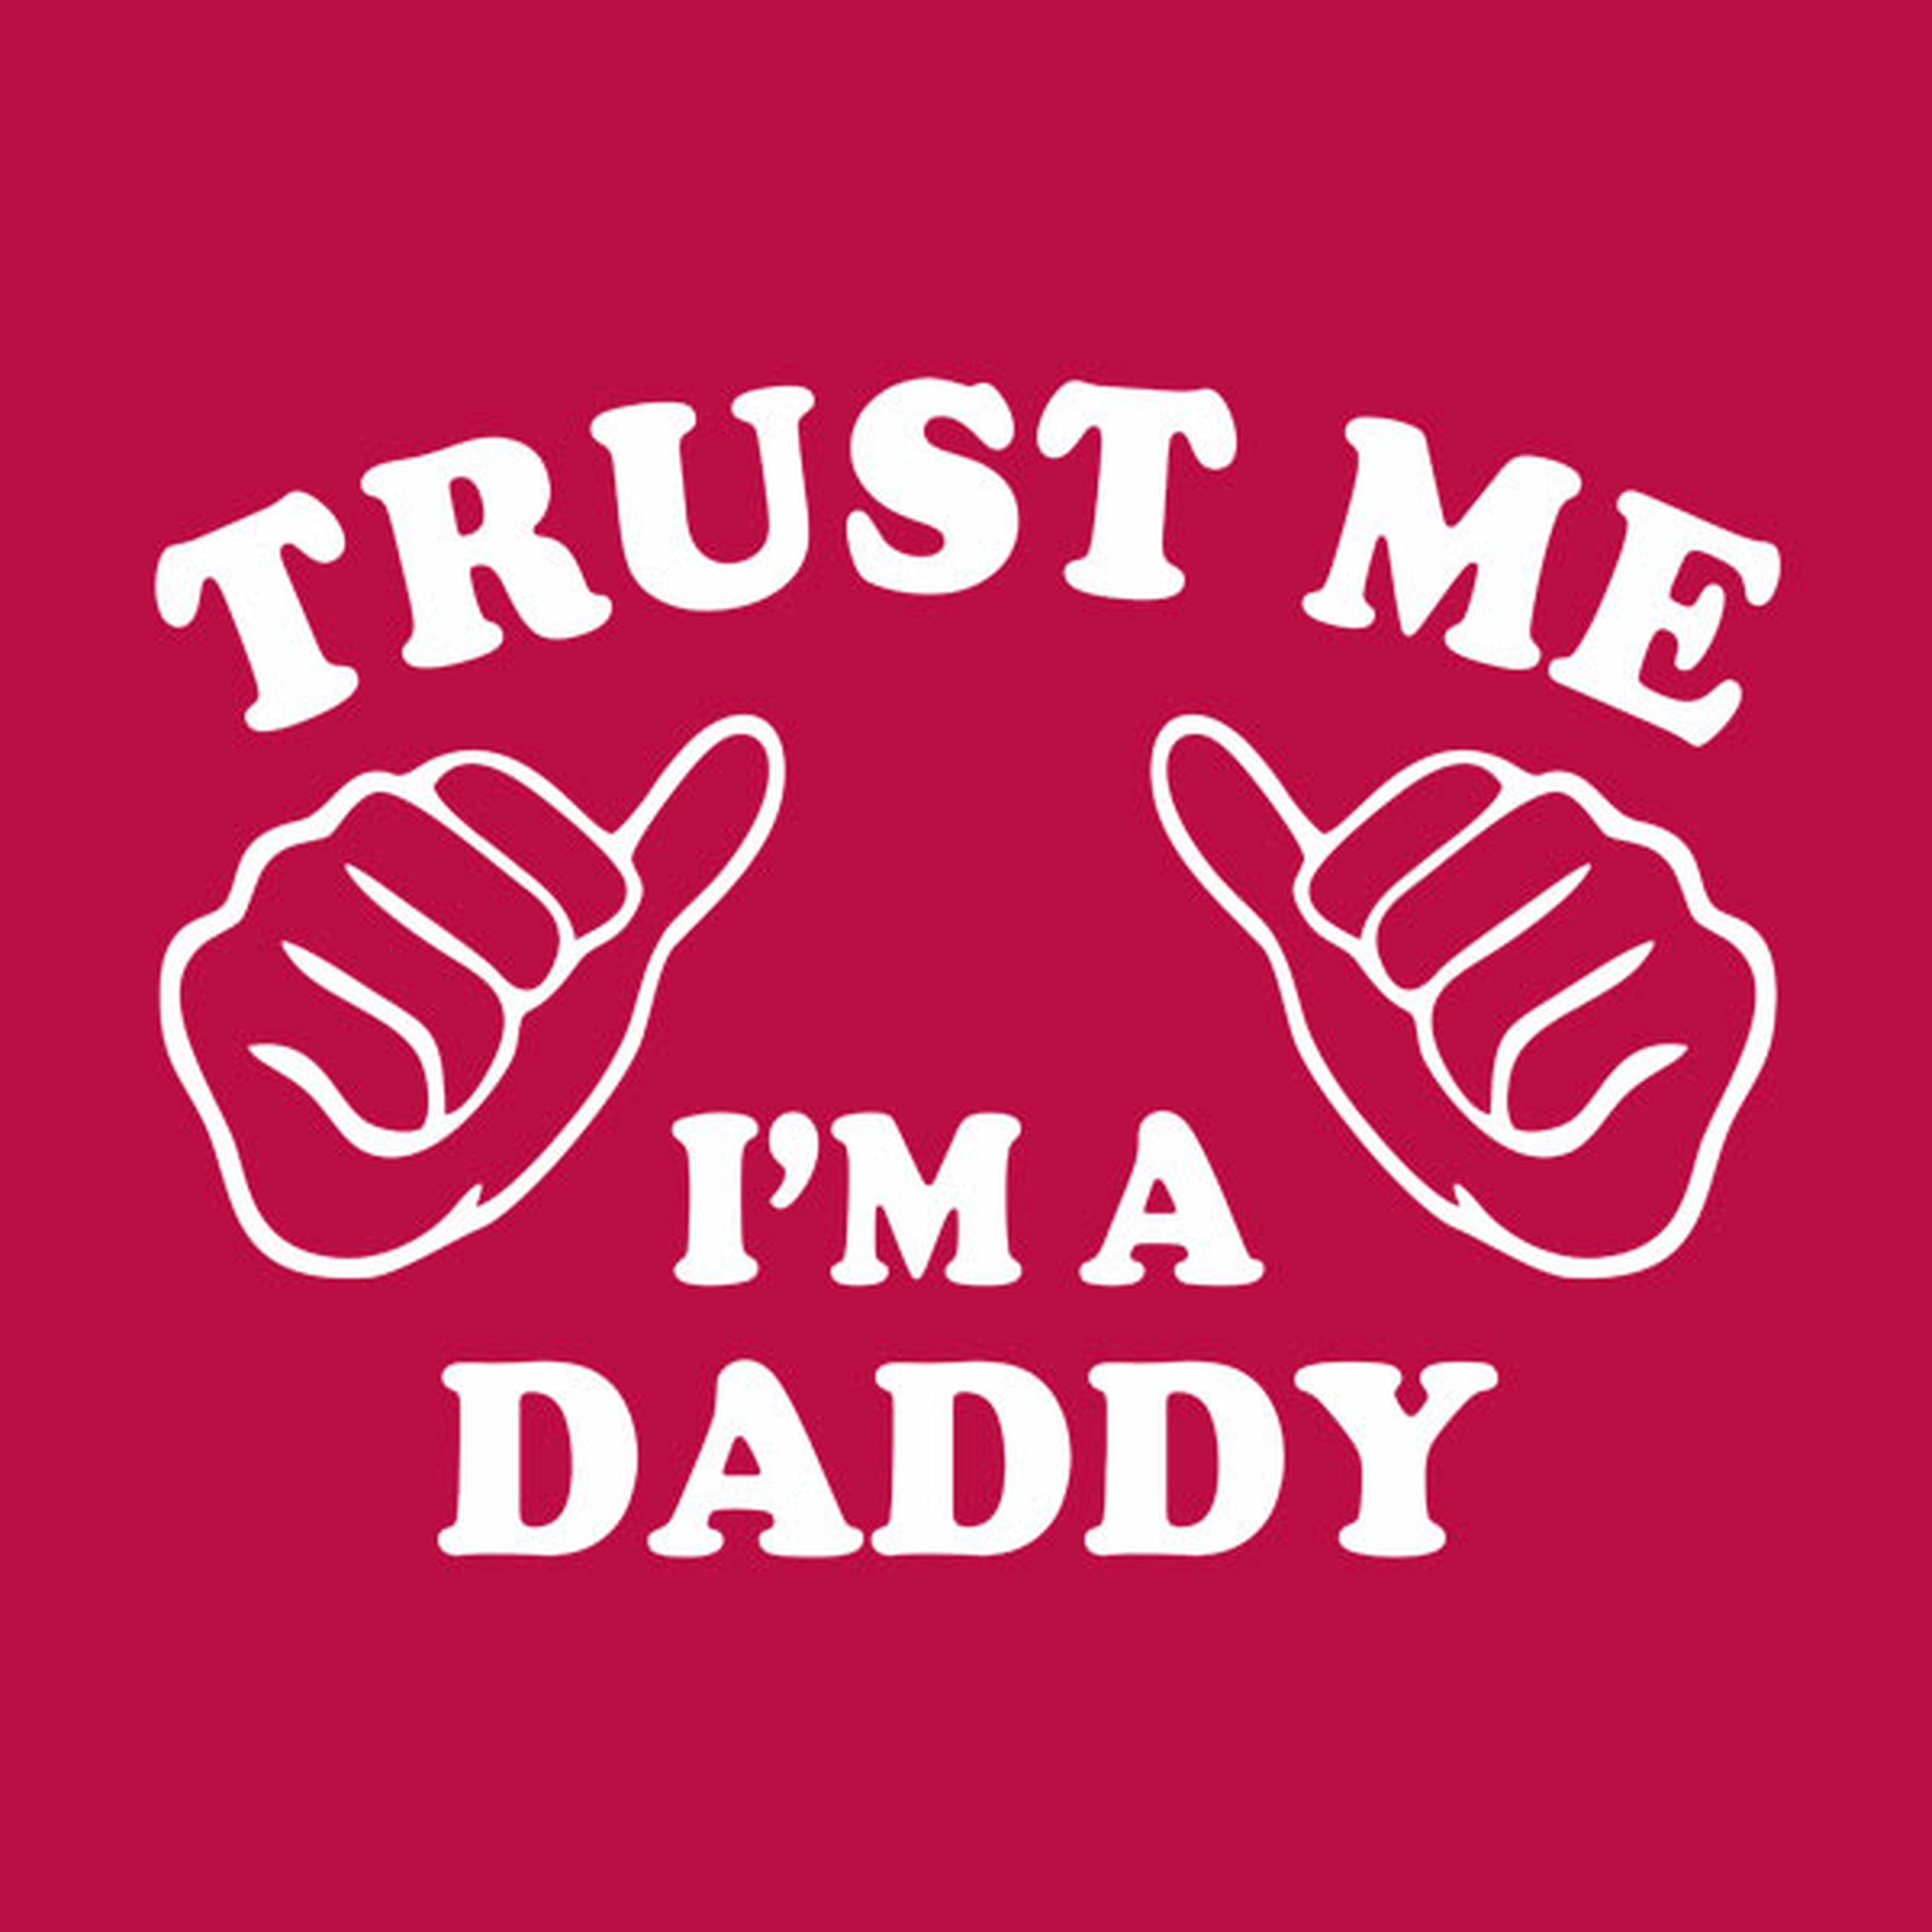 Trust me - I am a daddy - T-shirt